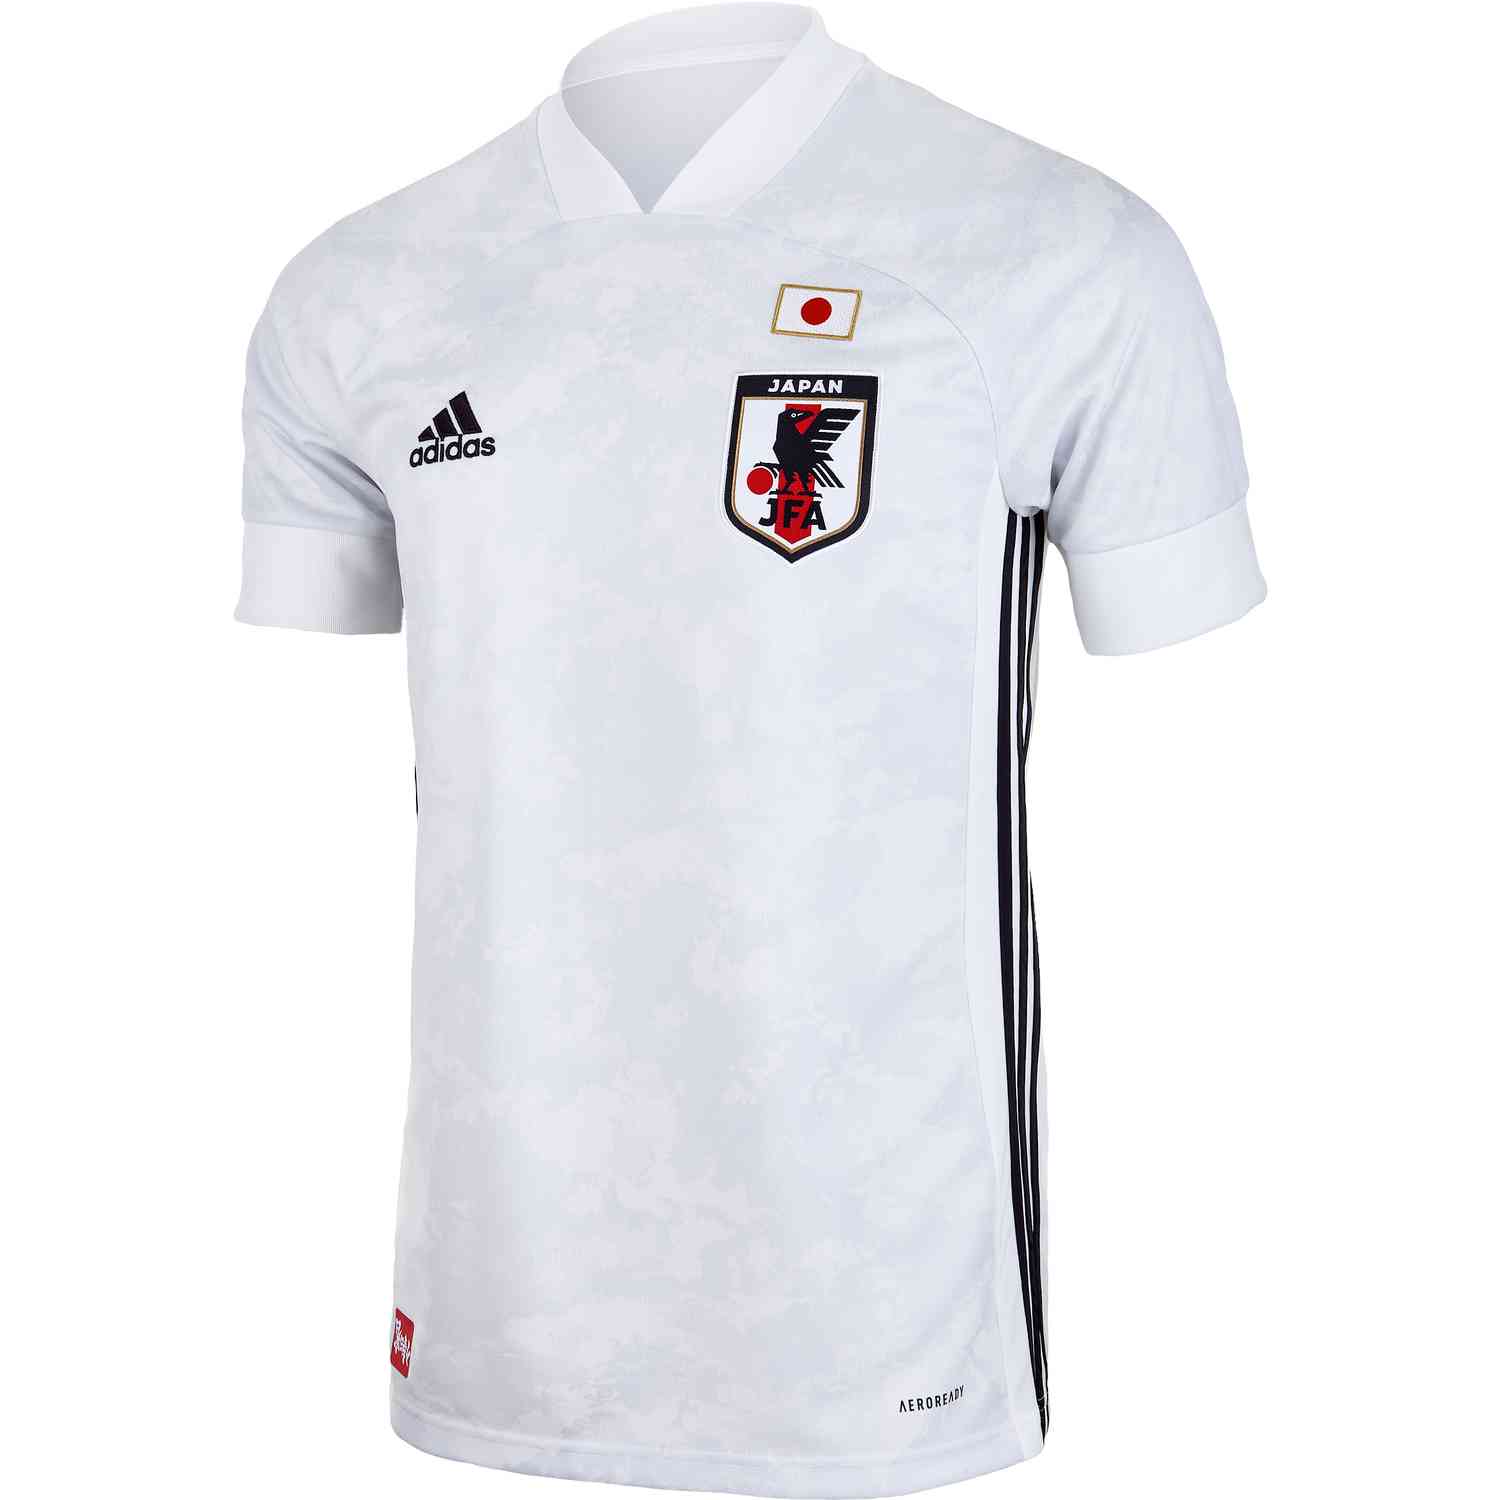 adidas soccer uniforms 2020